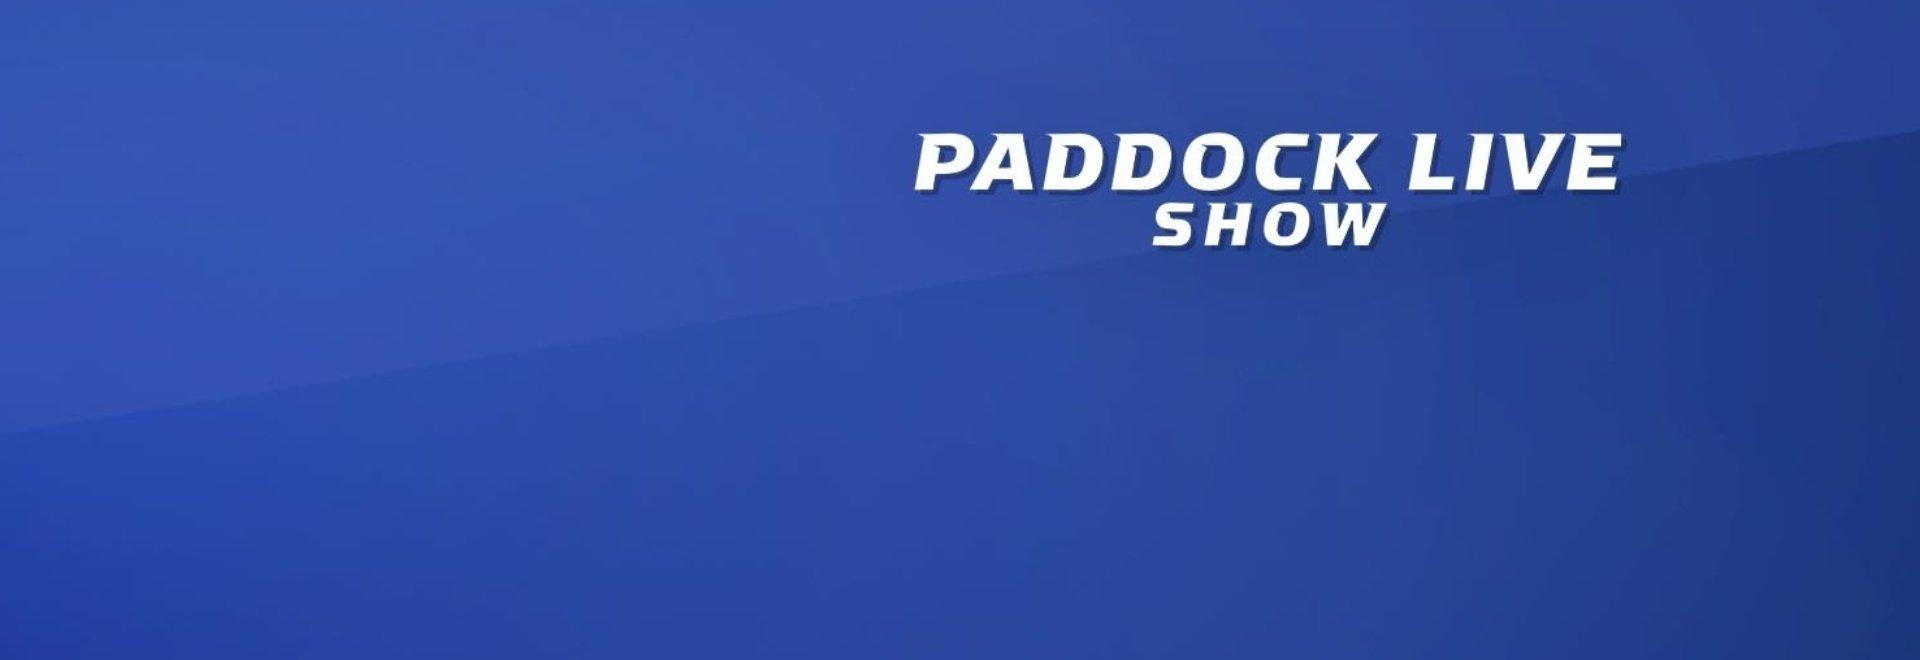 Paddock Live Show